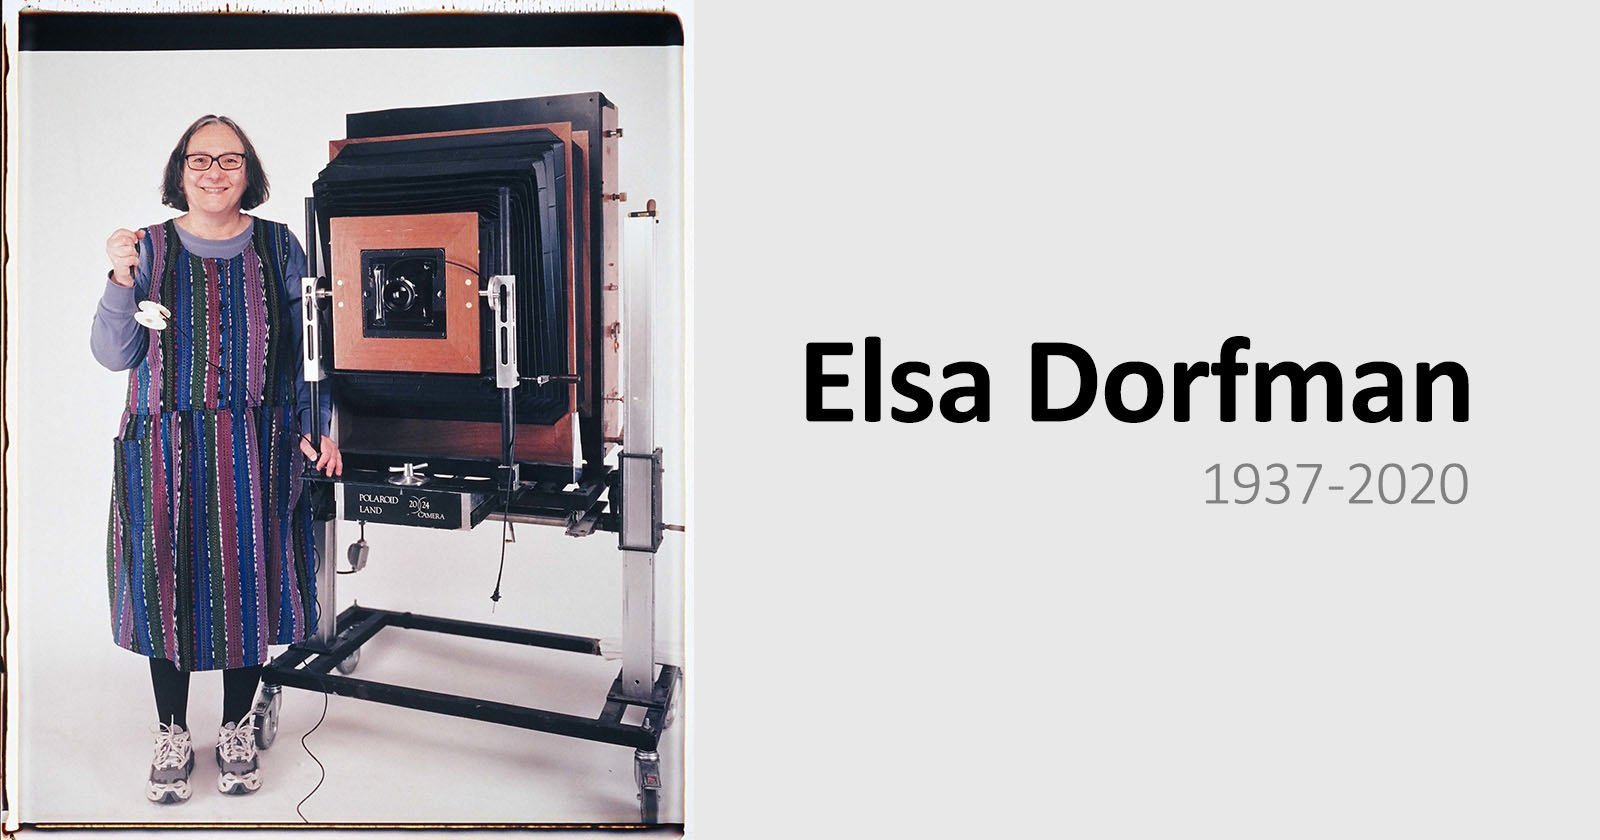 Elsa Dorfman, Giant Polaroid Camera Photographer, Dies at 83